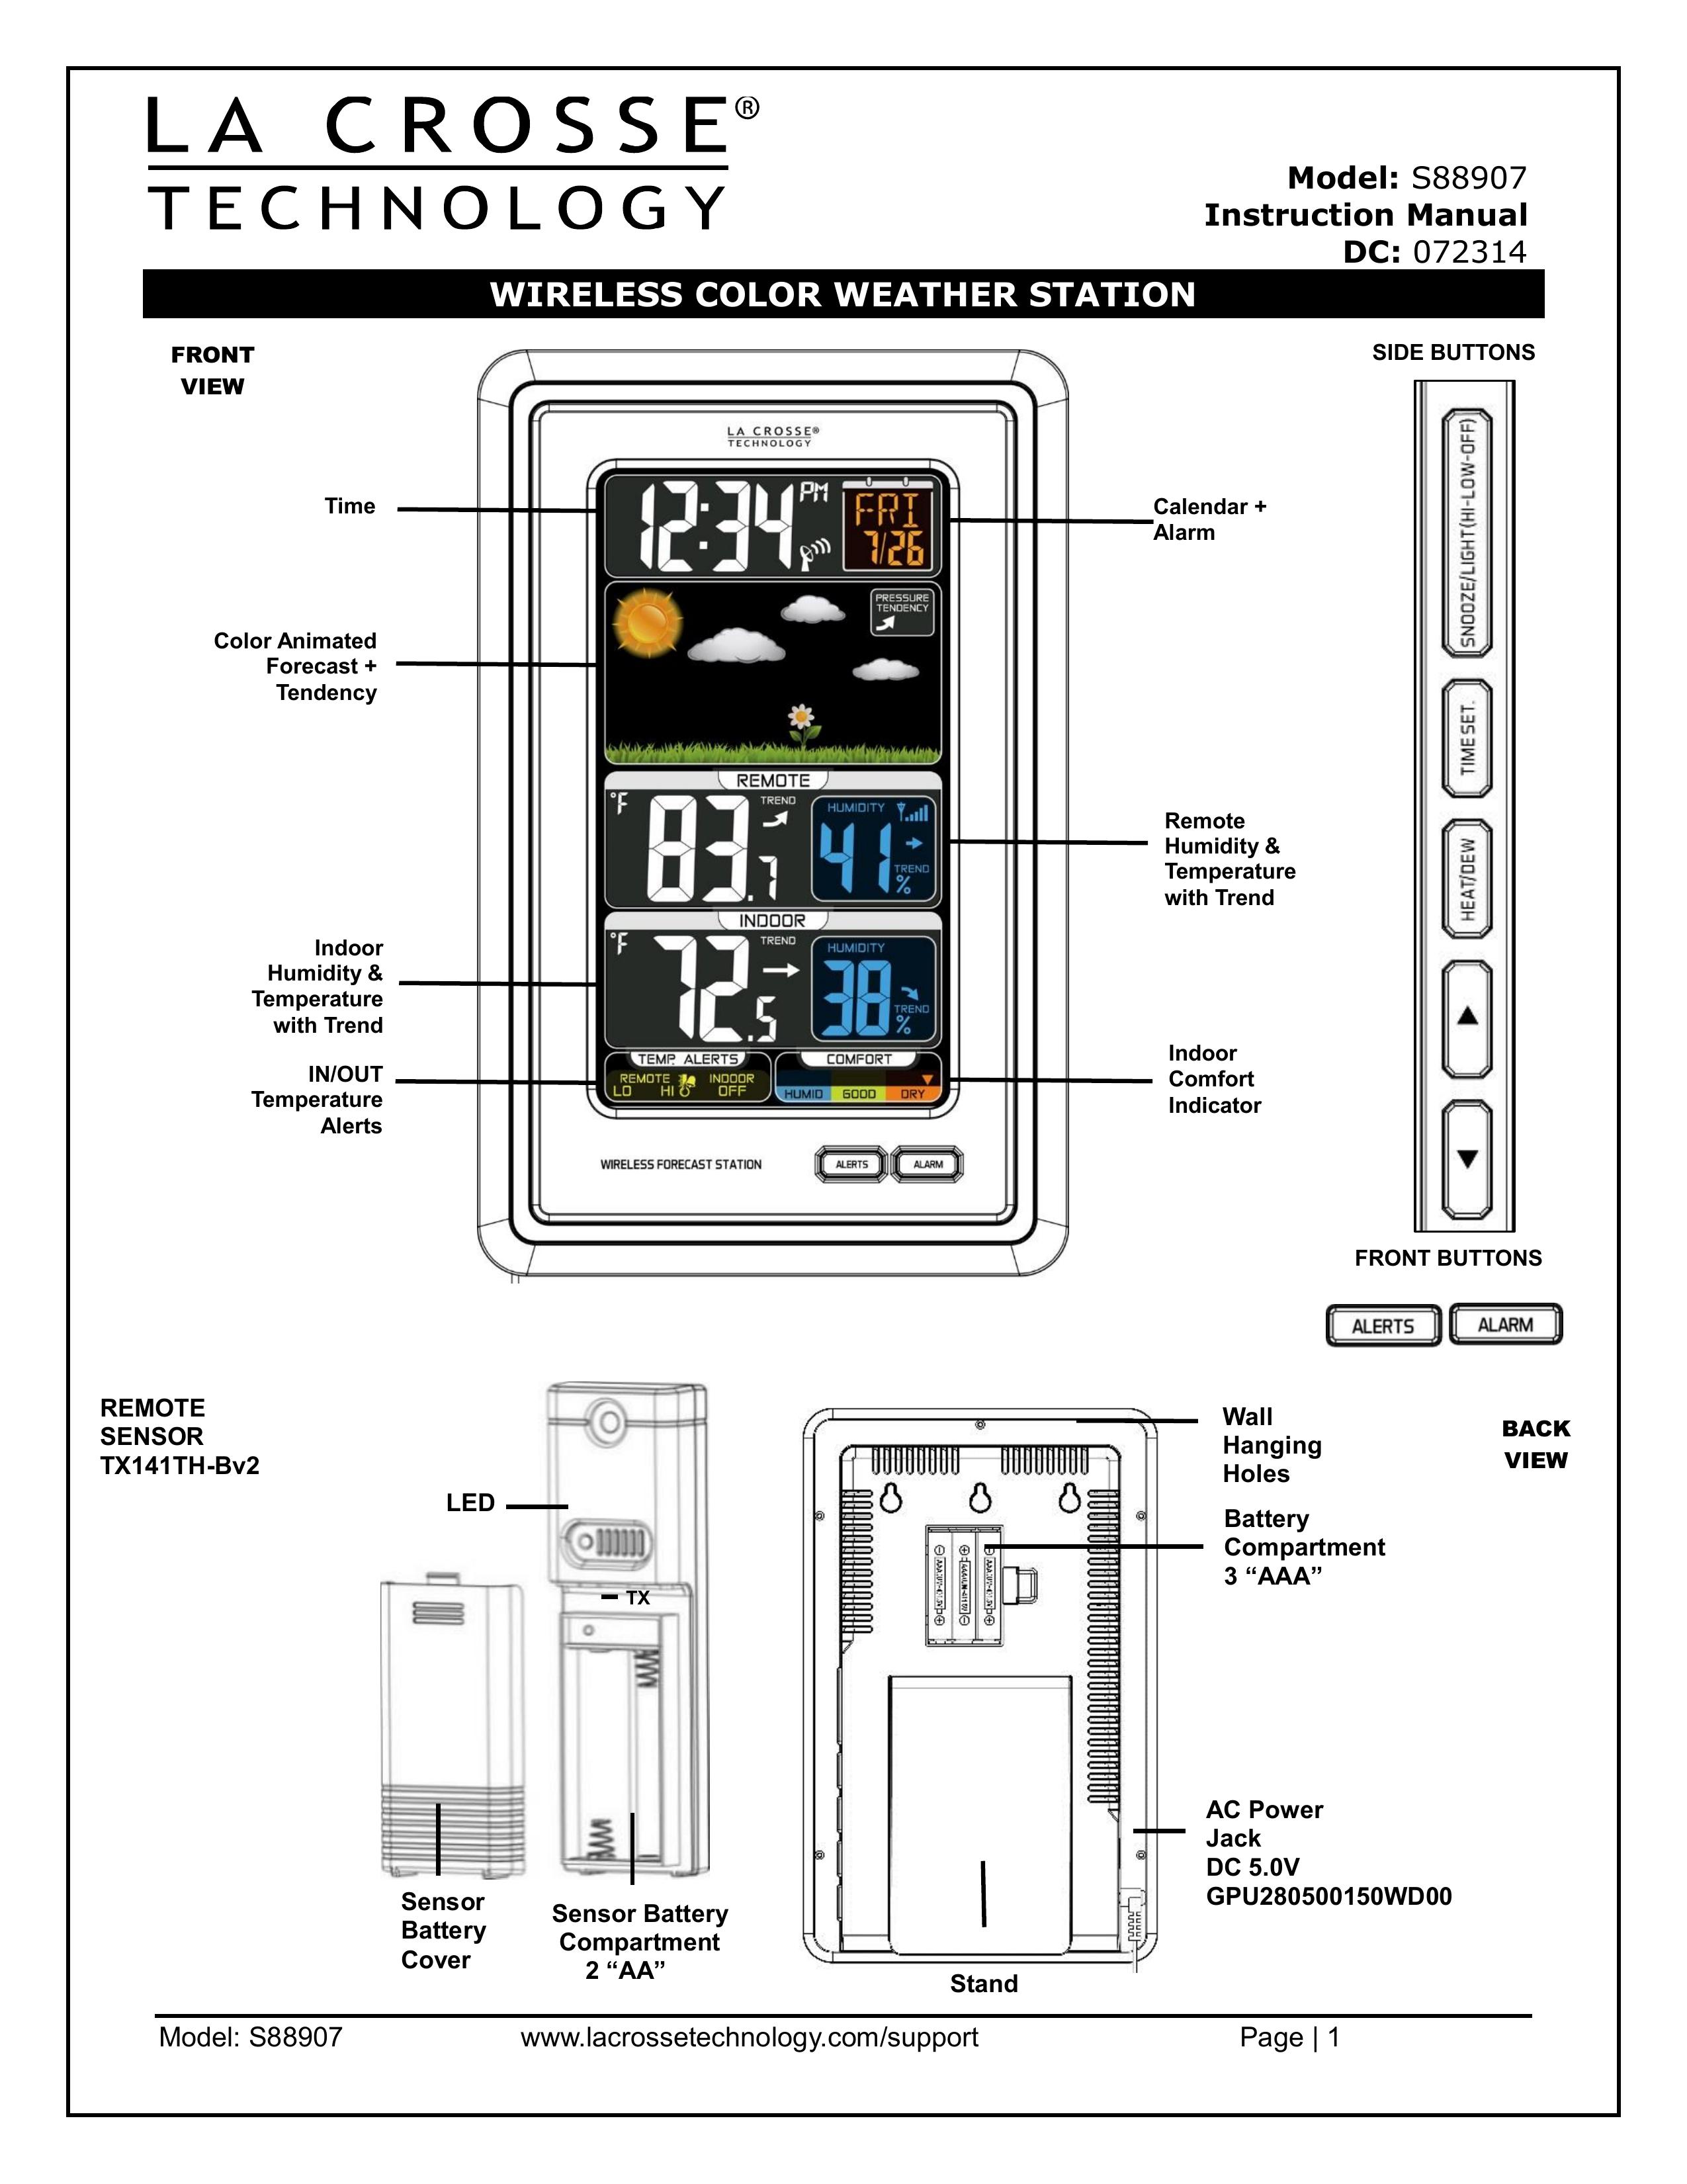 La Crosse Technology S88907 Marine Radio User Manual